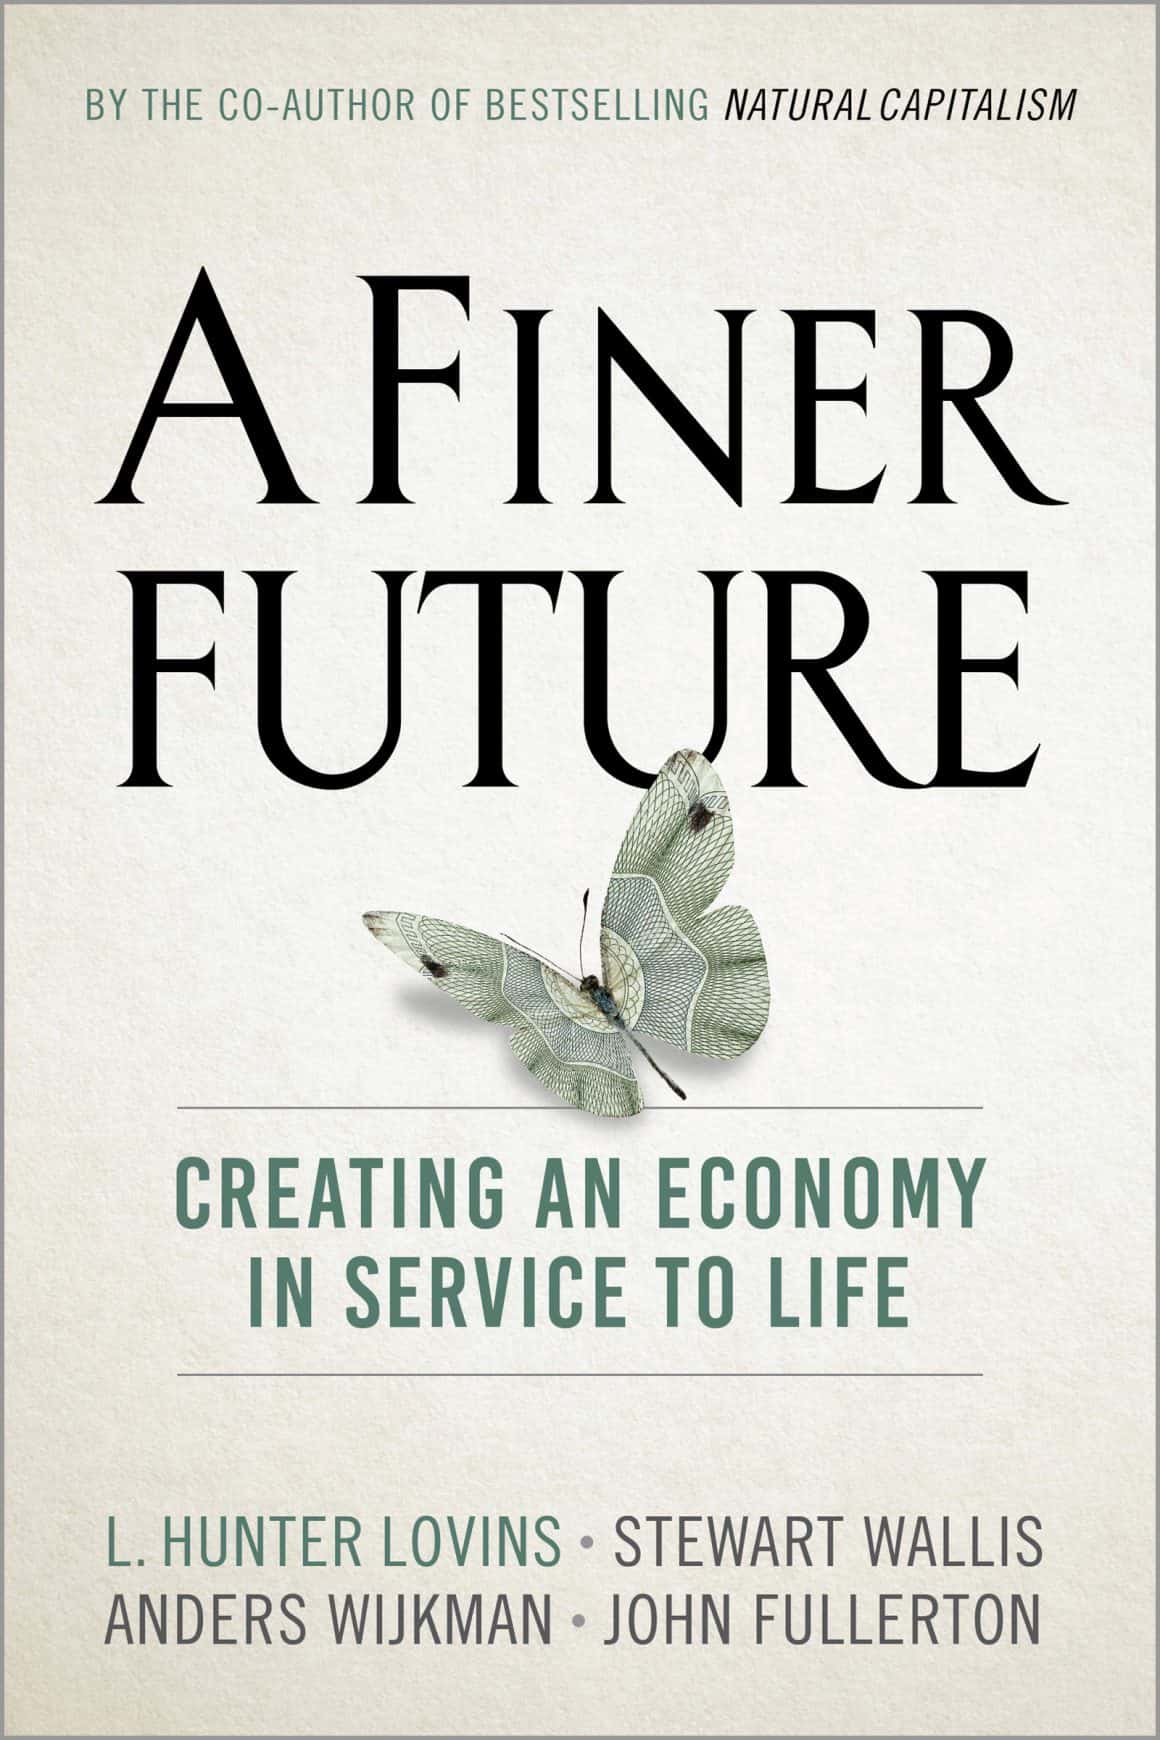 “A Finer Future” by Hunter Lovins, Stewart Wallis, Anders Wijkman, and John Fullerton 